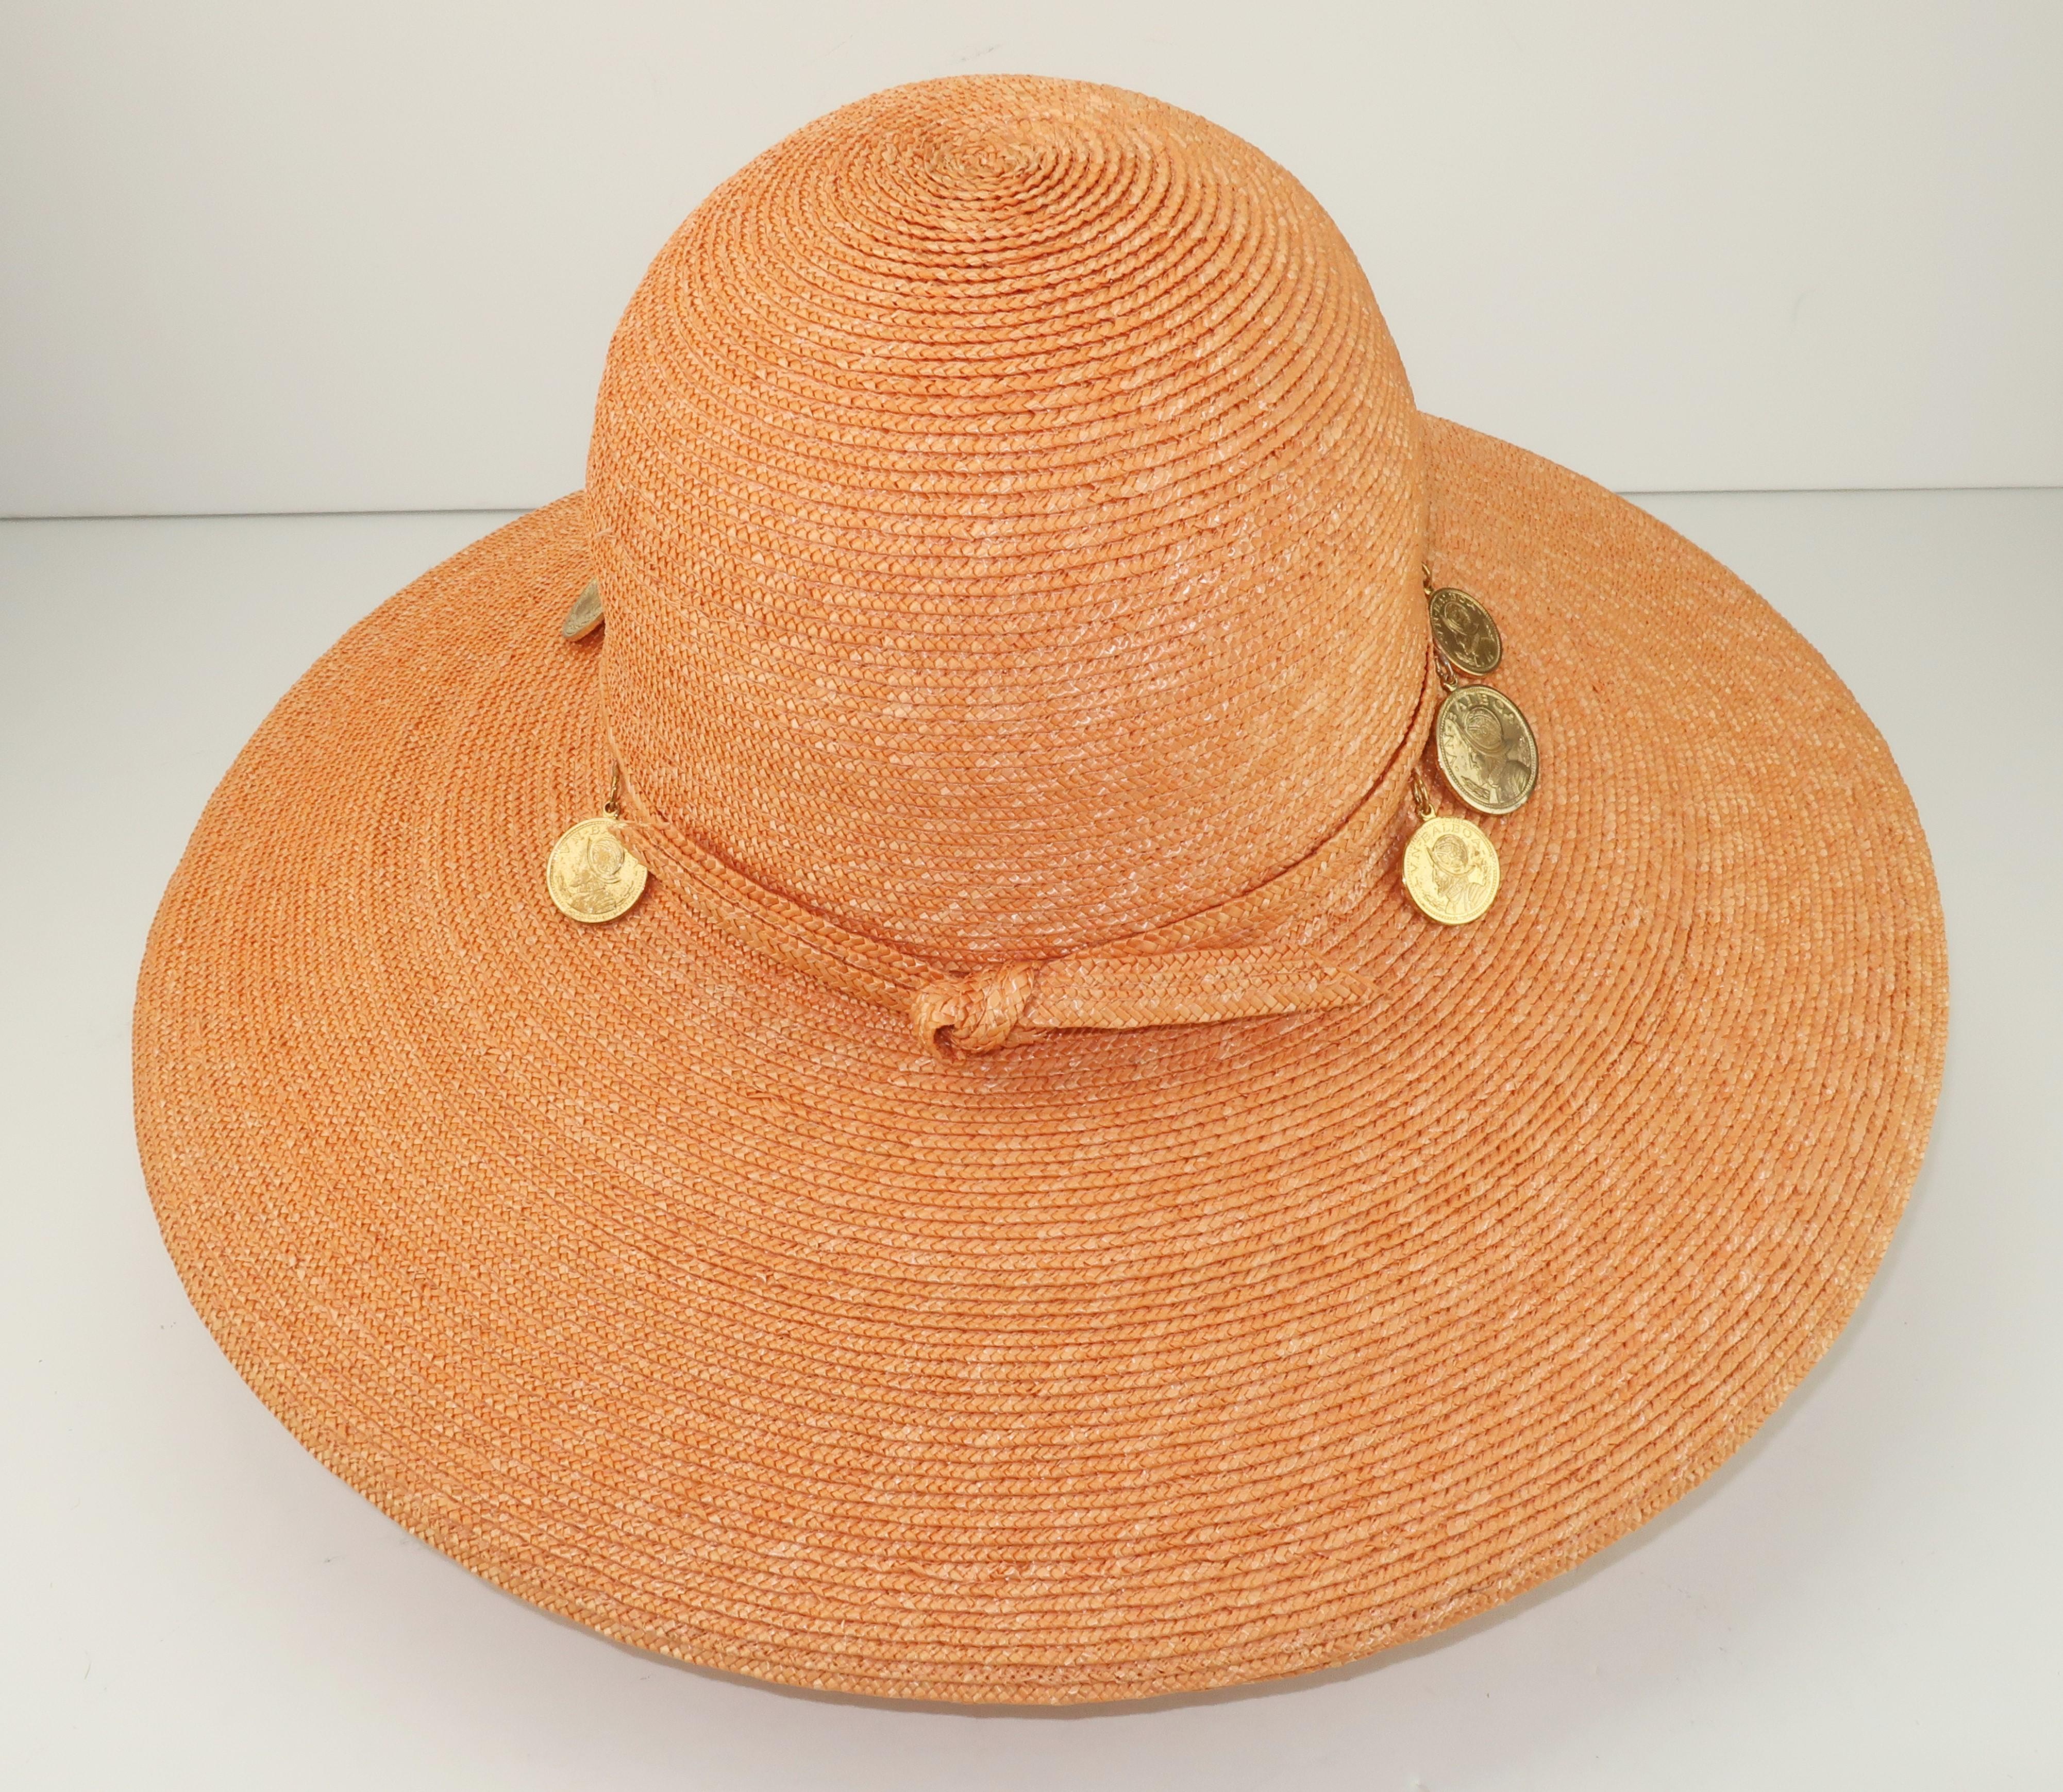 Vintage Wide Brim Straw Hat With Gold Coins 3